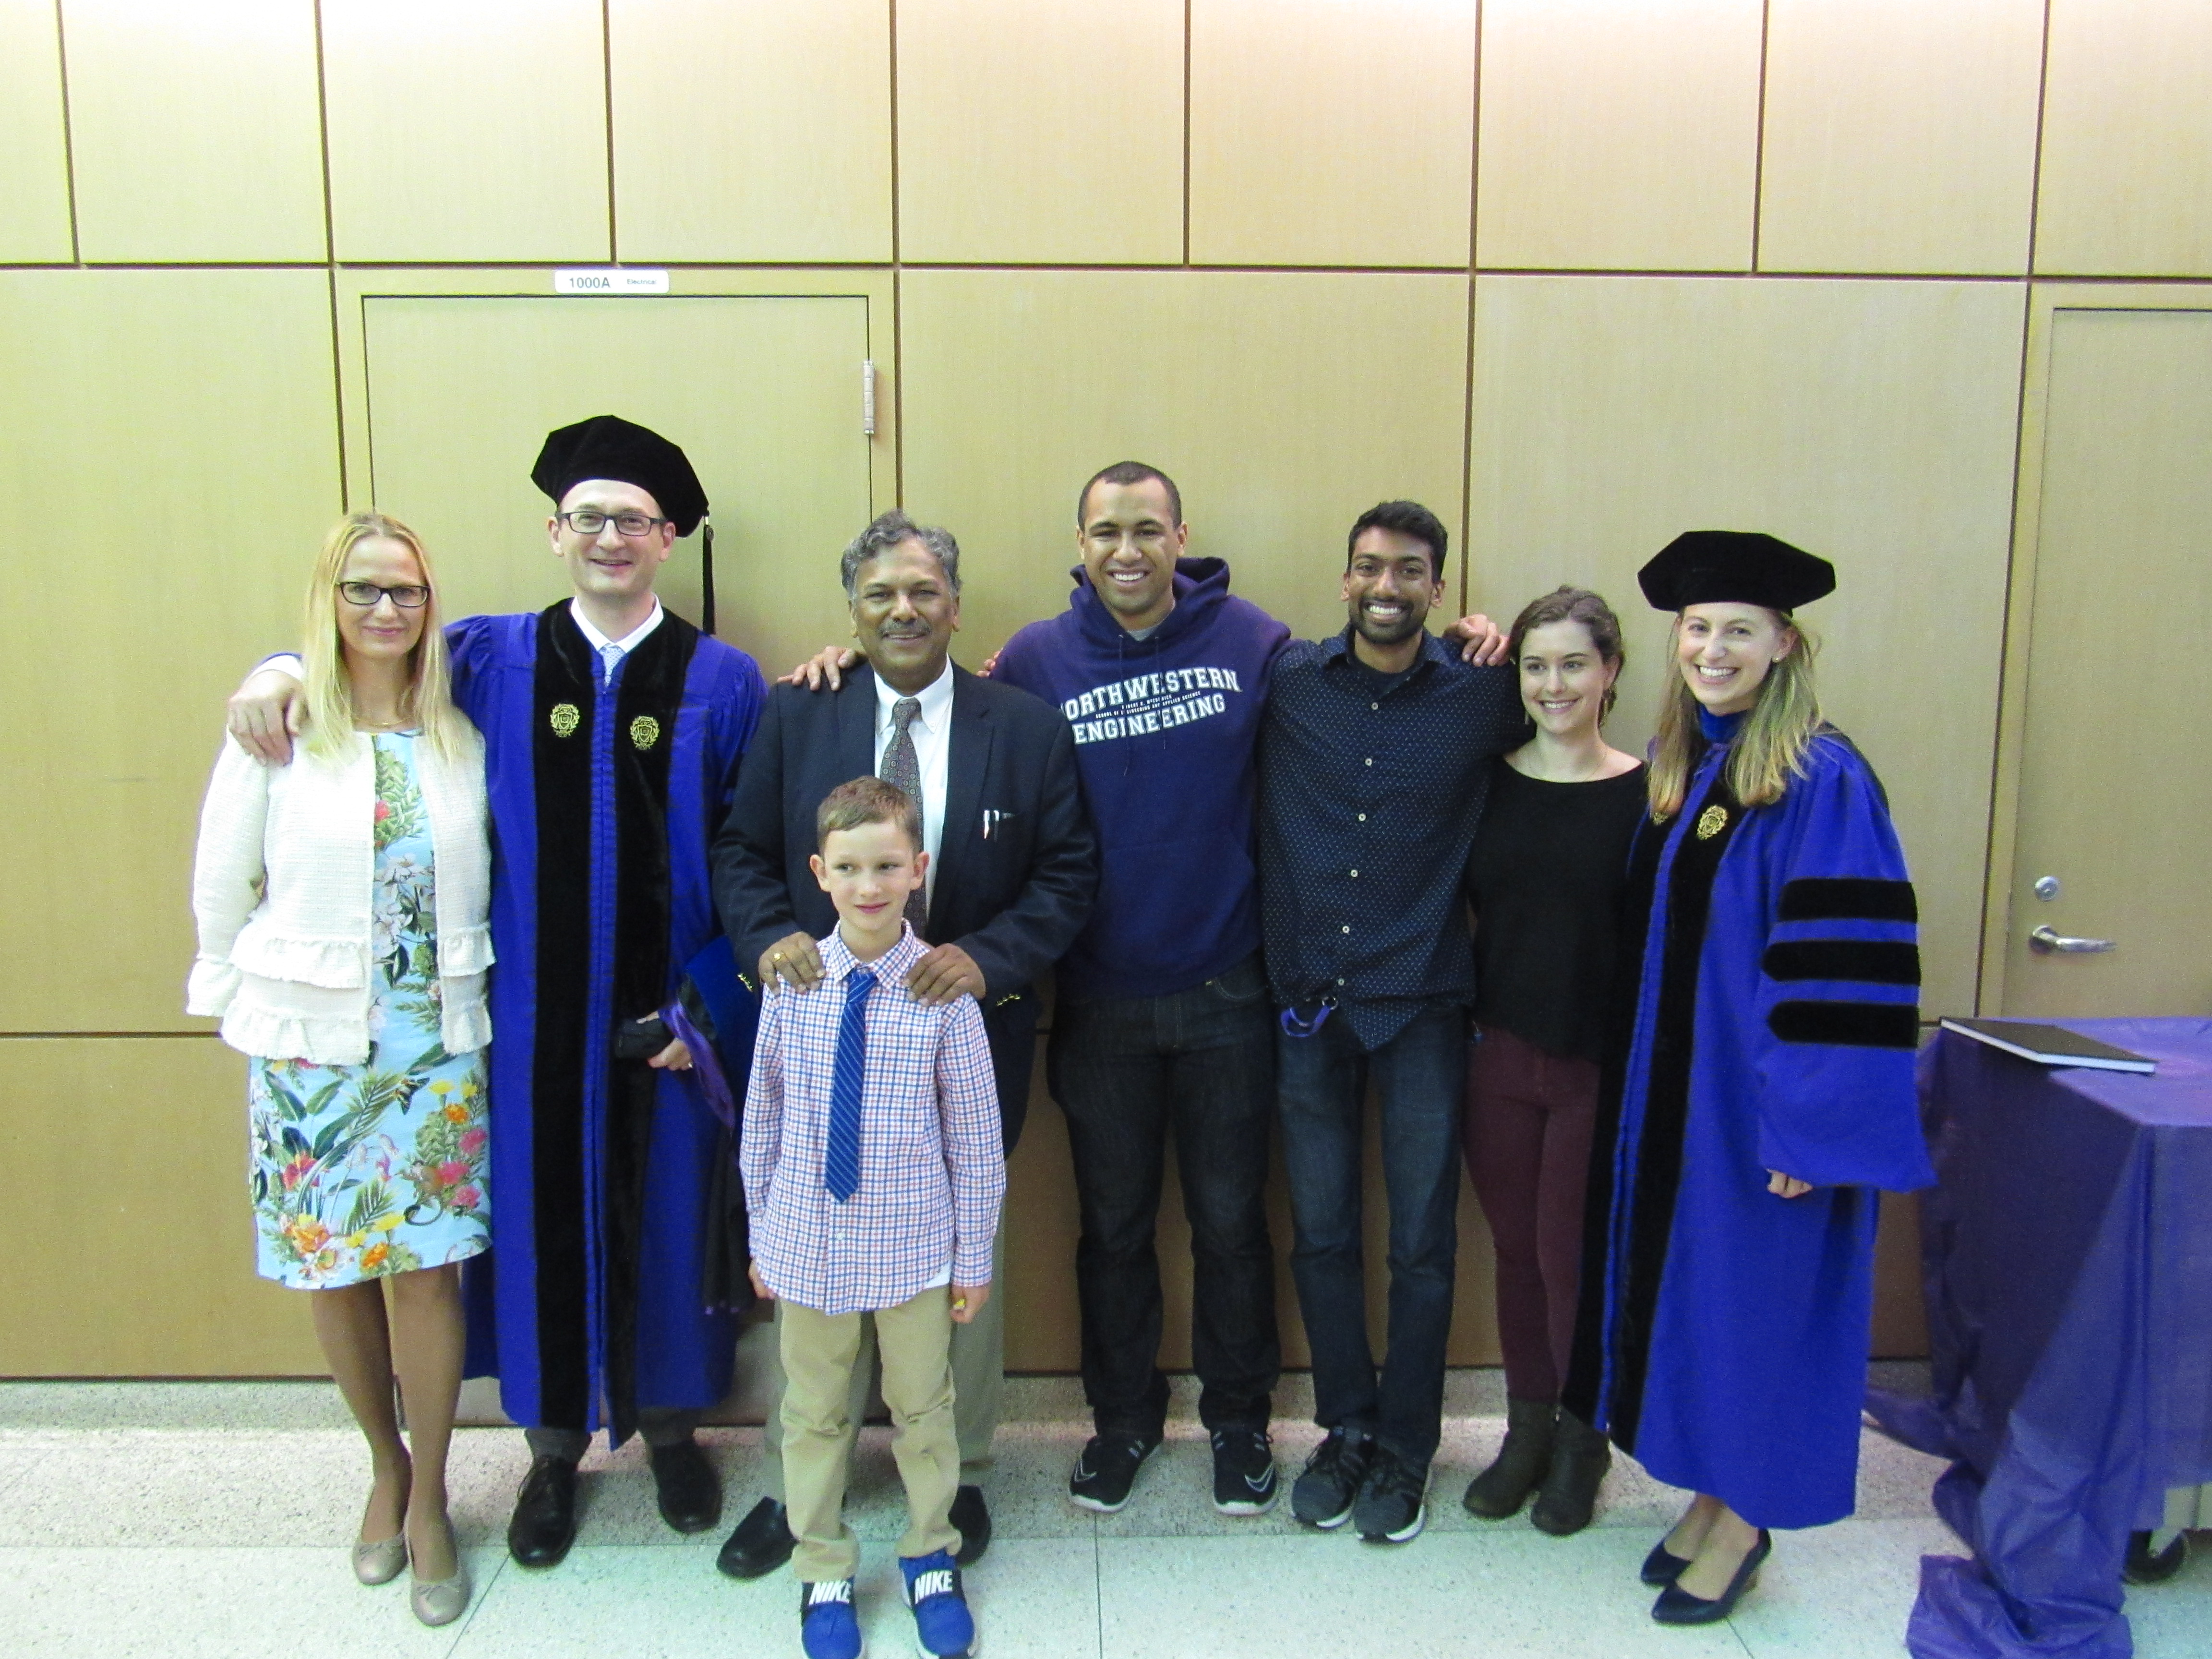 The graduates pose with members of VPD Group and the Myers family. Left to right: Dorota Myers, Ben Myers, Max Myers, Vinayak Dravid, Jann Grovogui, Akshay Murtha, Jenn DiStefano, Eve Hanson